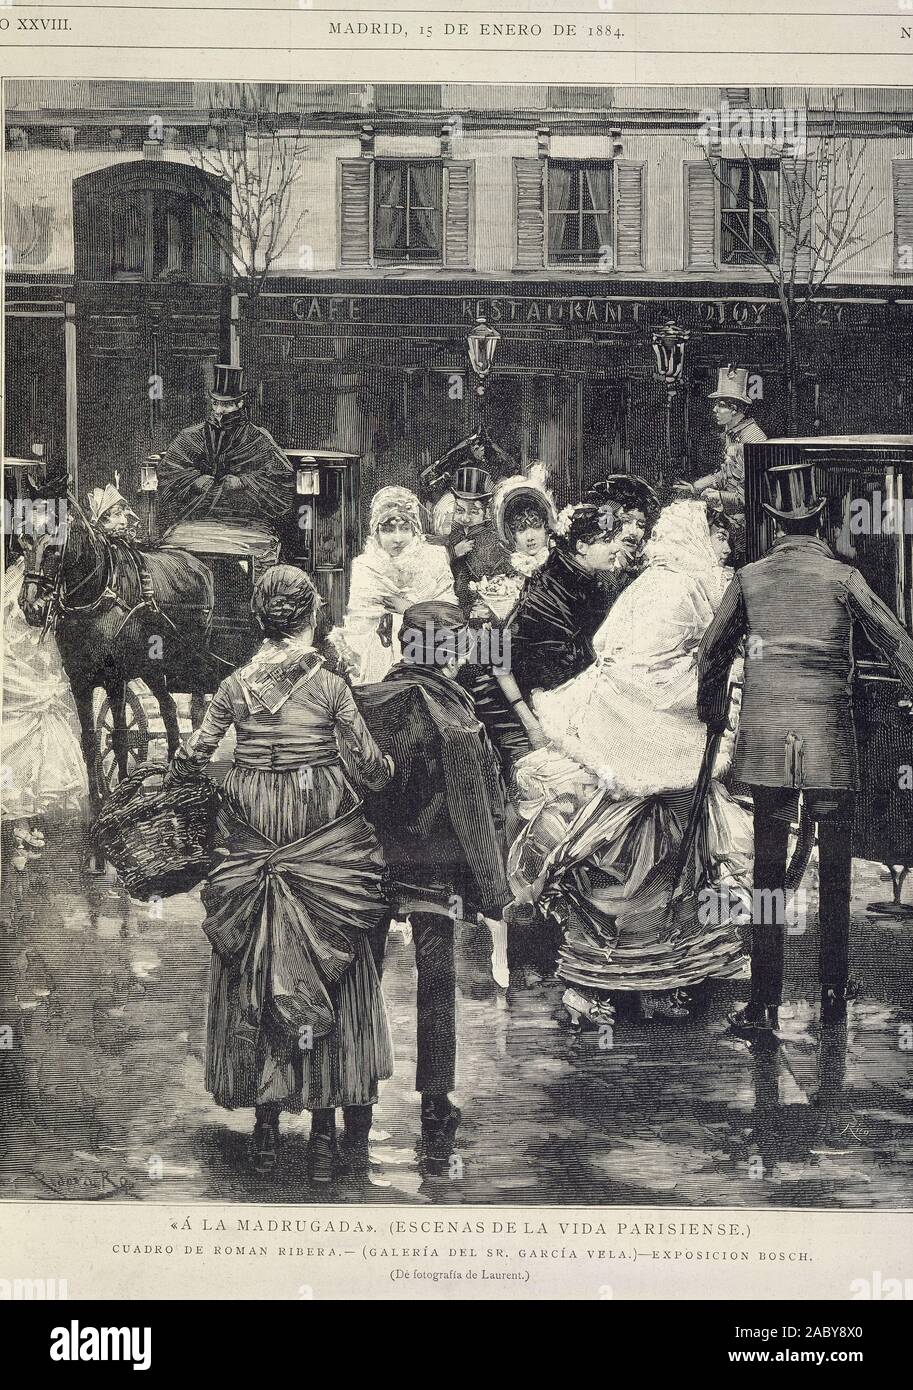 ILUSTRACION ESPAÑOLA Y AMERICANA: 'A LA MADRUGADA' (VIDA PARISIENSE) MADRID - 15/1/1884. Author: ROMAN RIBERA. Location: BIBLIOTECA NACIONAL-COLECCION. MADRID. SPAIN. Stock Photo